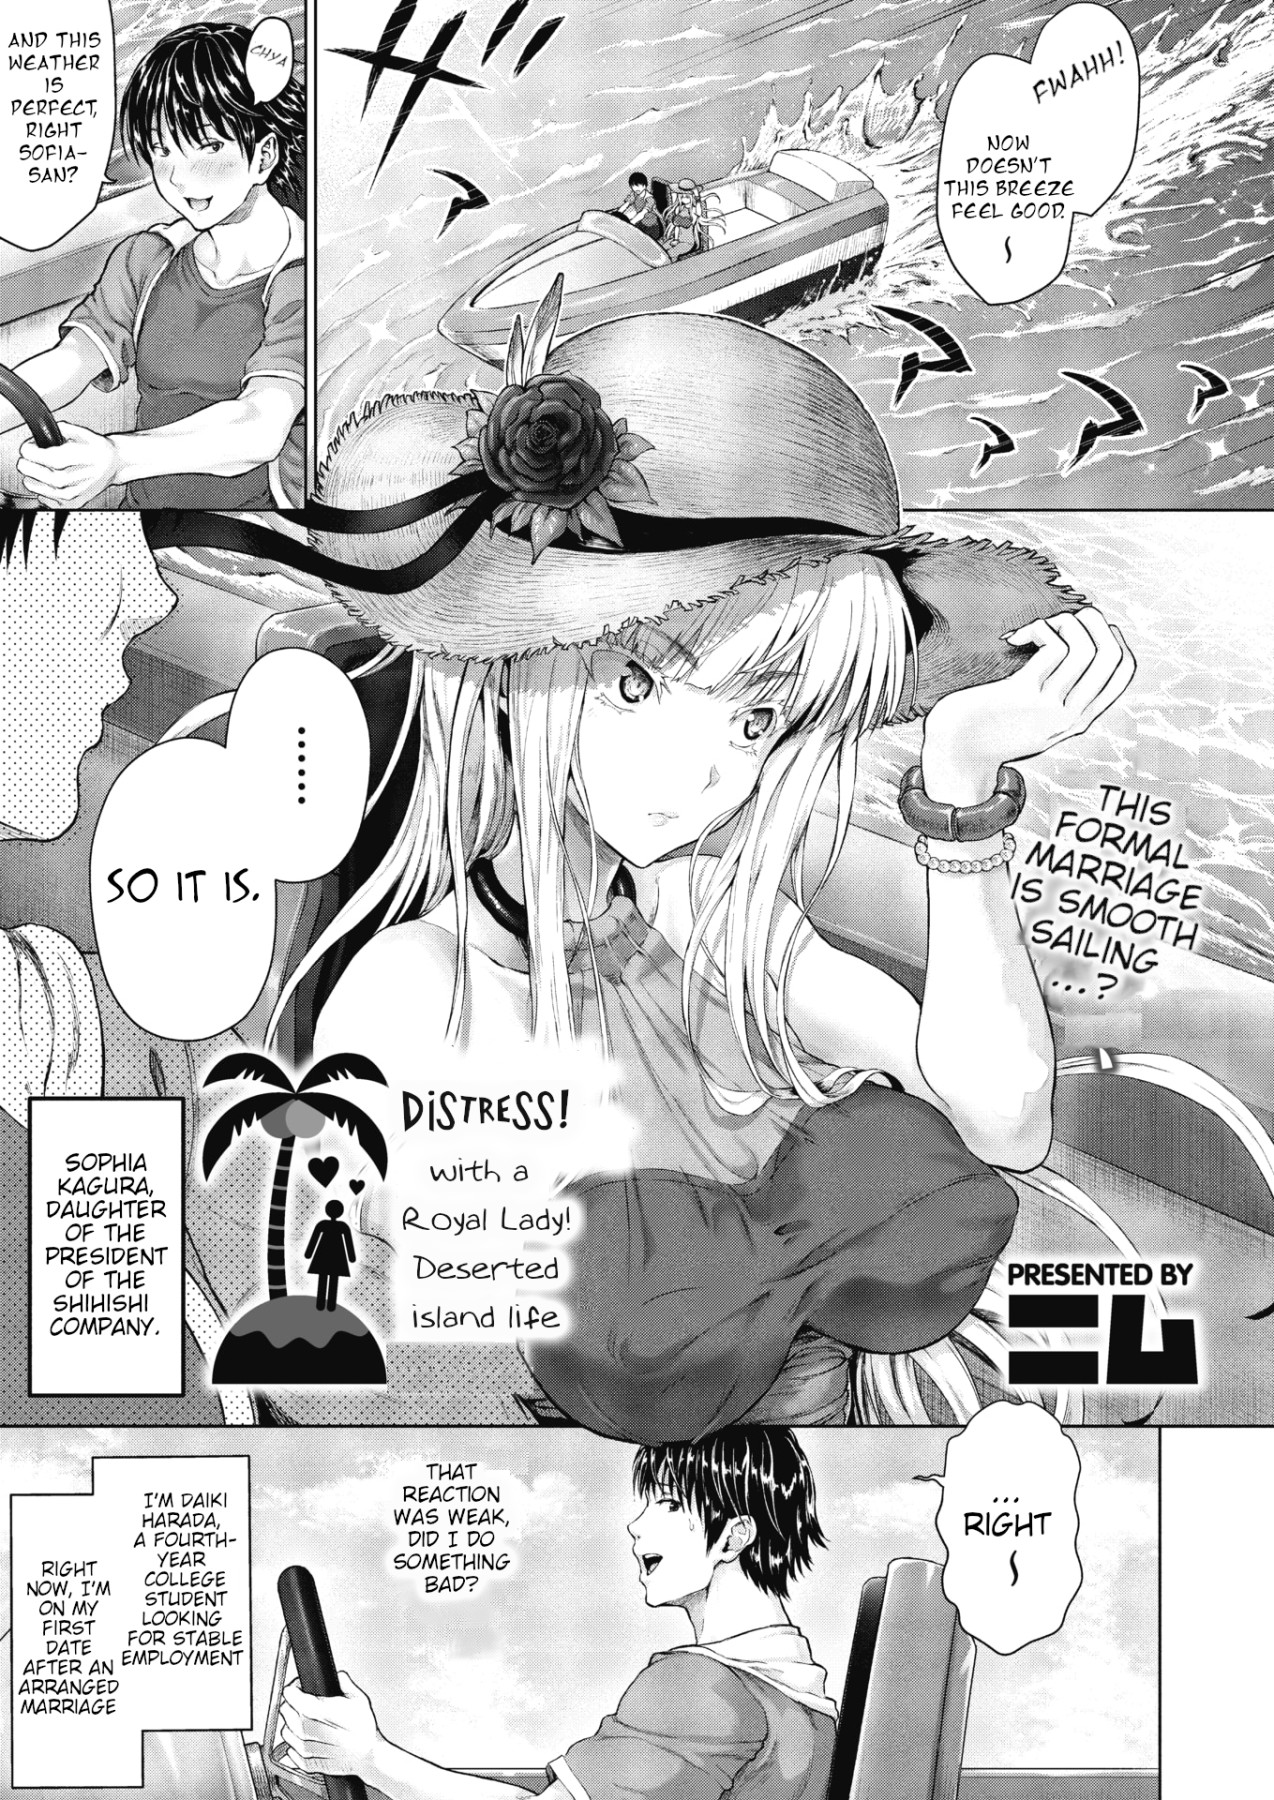 Hentai Manga Comic-Distress!/Love? With a Royal Lady! Deserted Island Life-Read-1